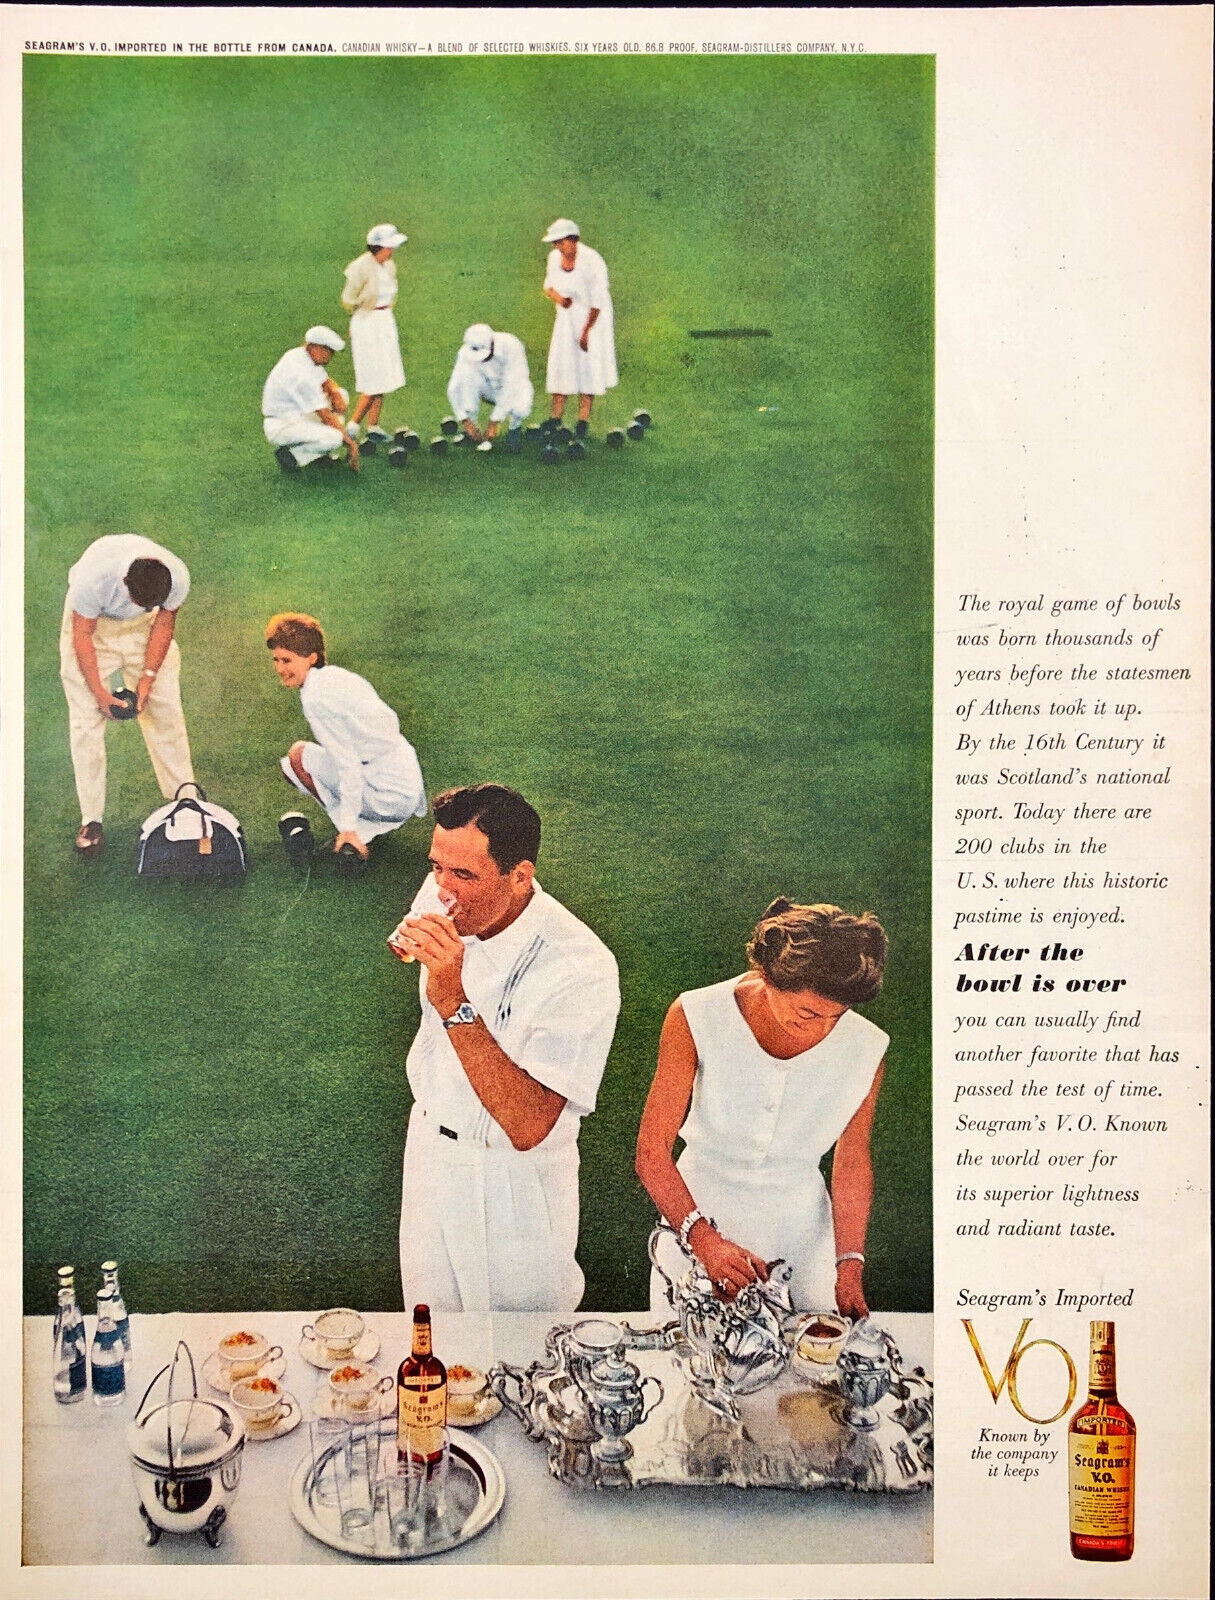 1961 Seagram\'s Imported V.O. Royal Game of Bowls Vintage Print Ad